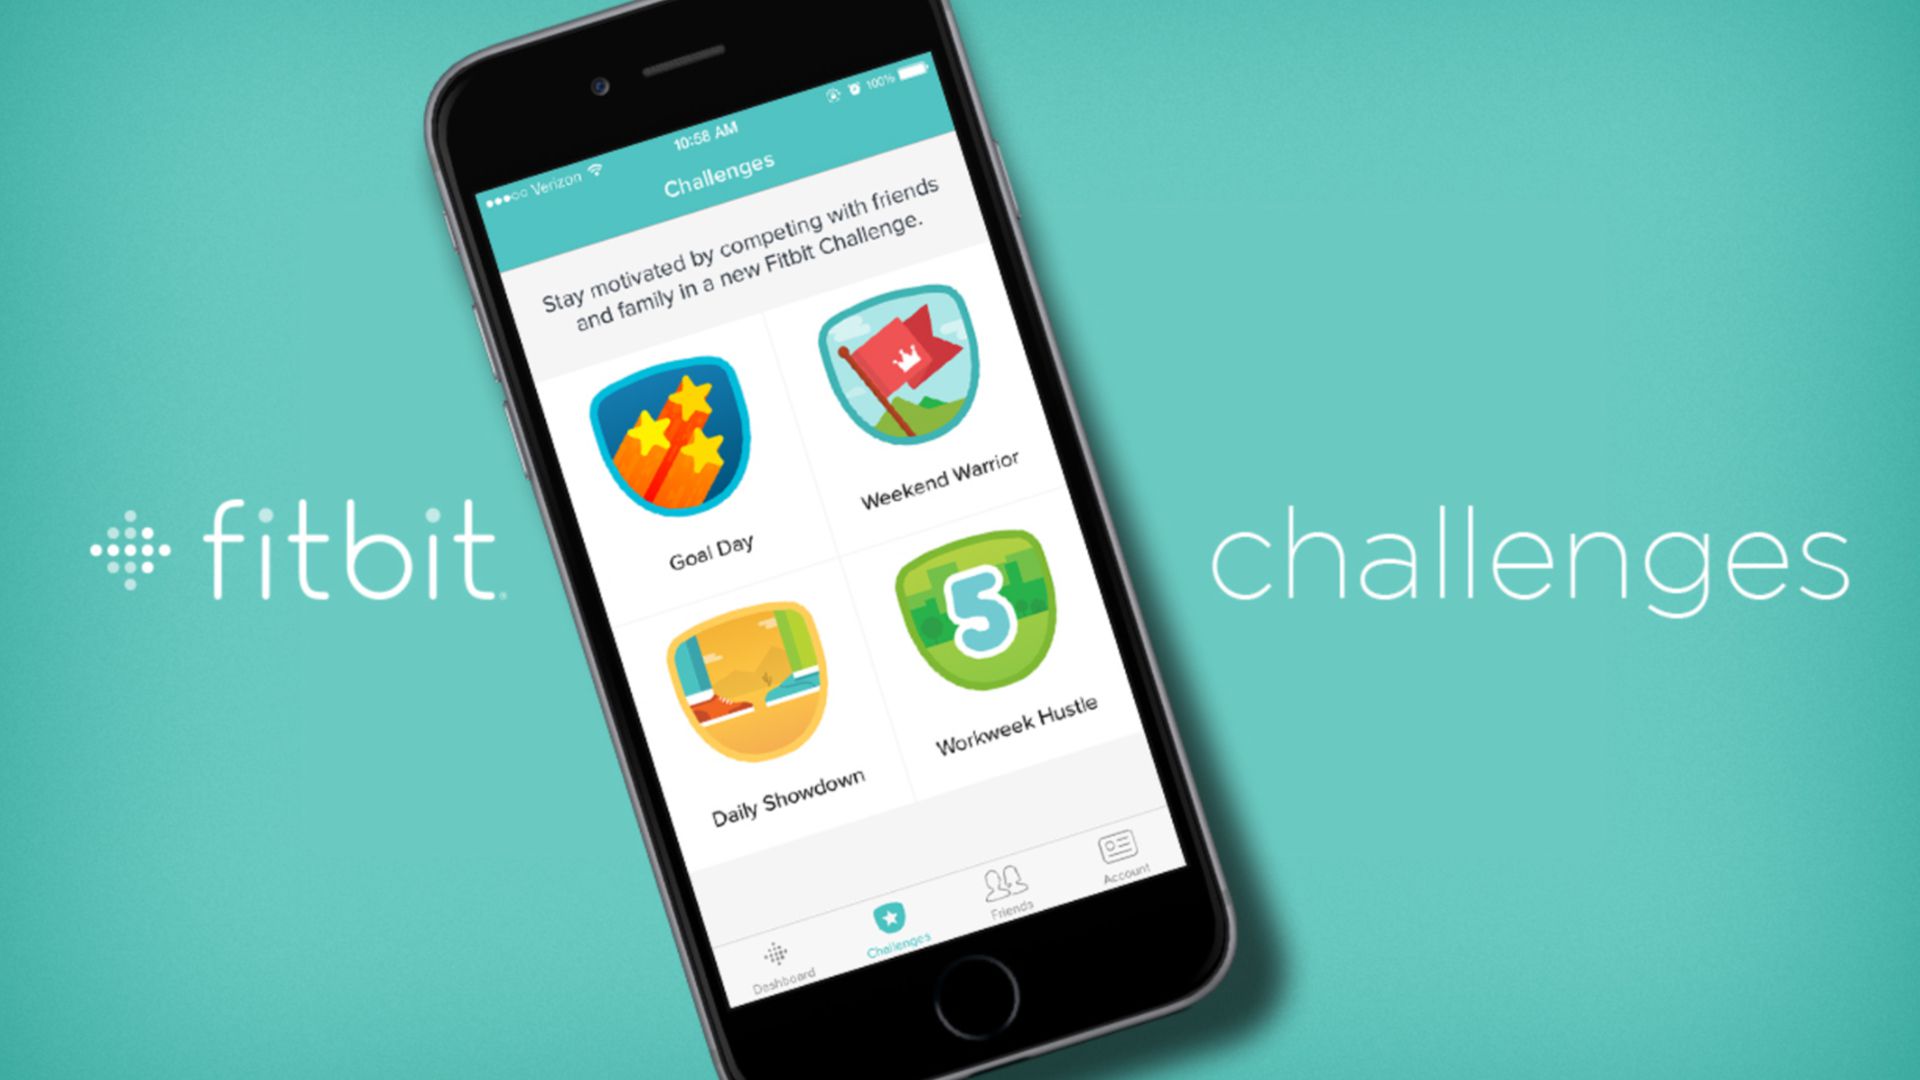 Desafios do Fitbit no aplicativo Fitbit para iPhone